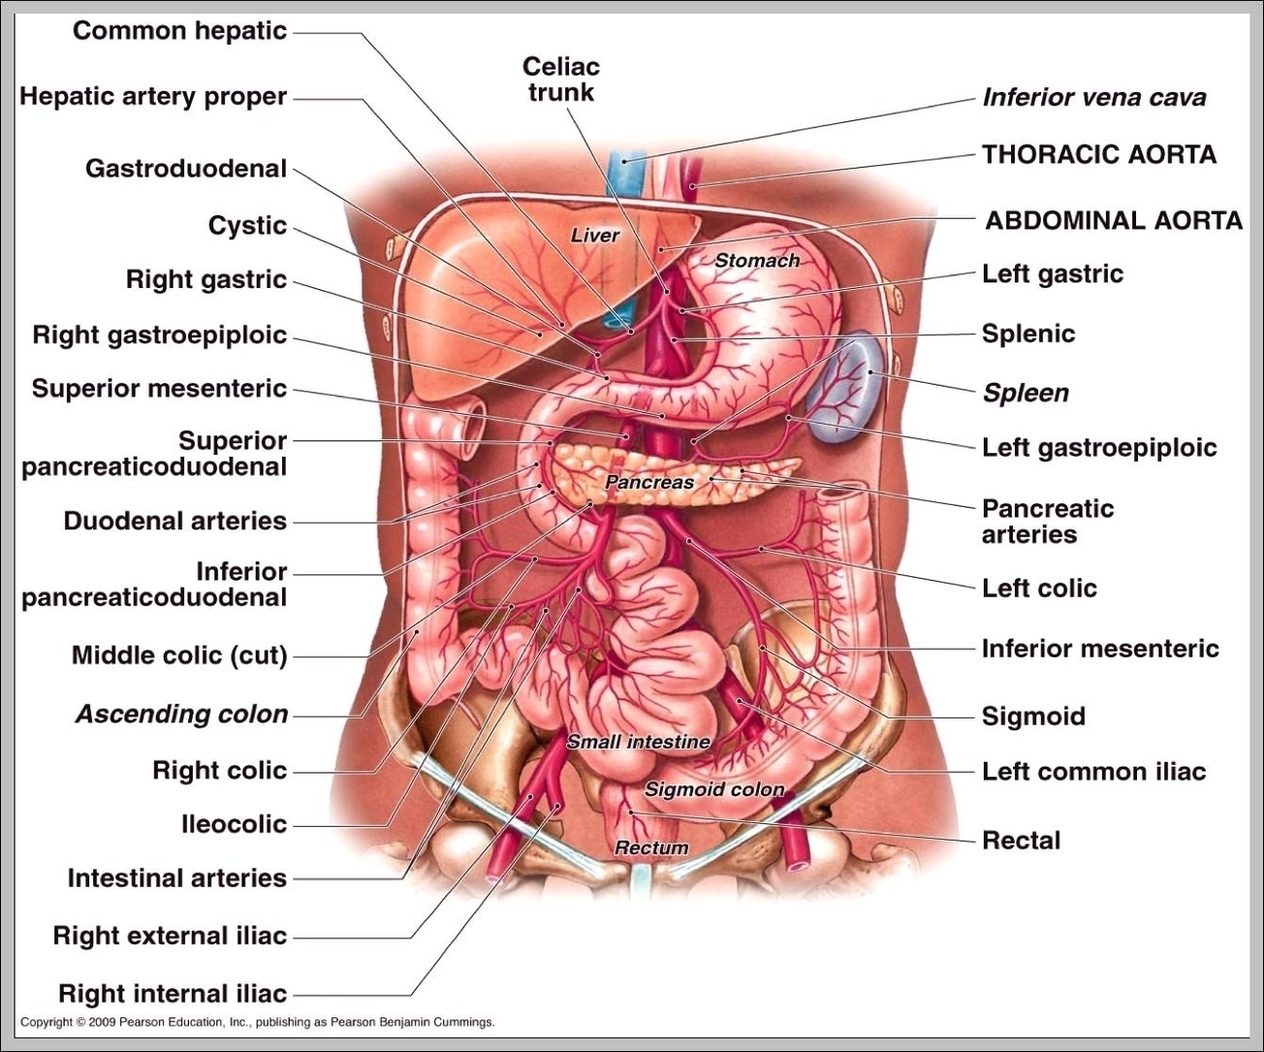 Celiac Artery Function Image